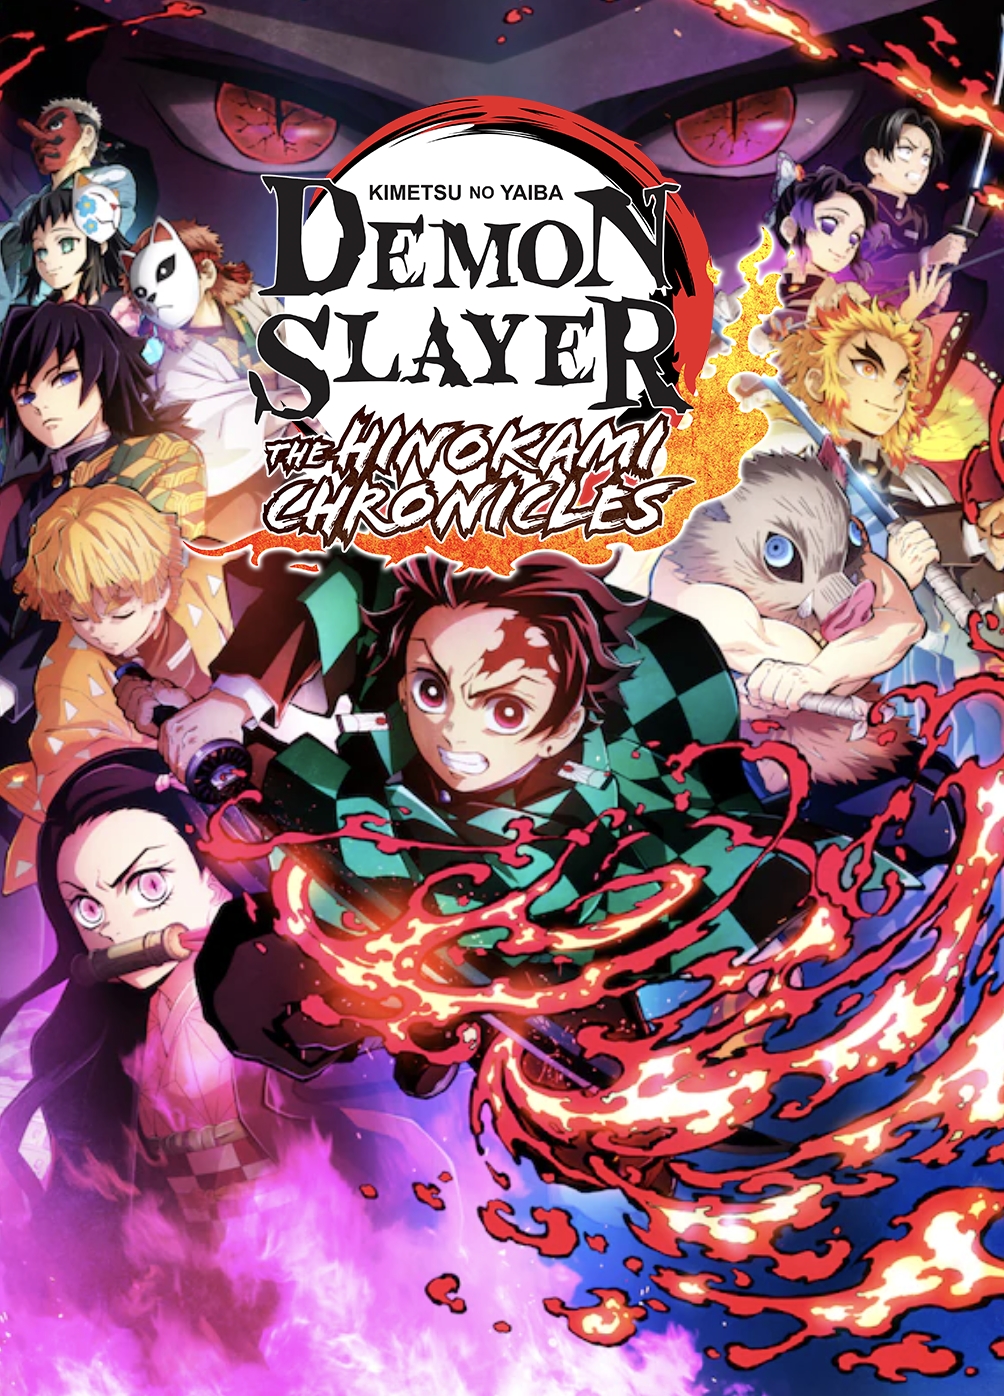 Demon Slayer Hinokami Chronicles 2 - Reveal Trailer - PS5, XSX, PC